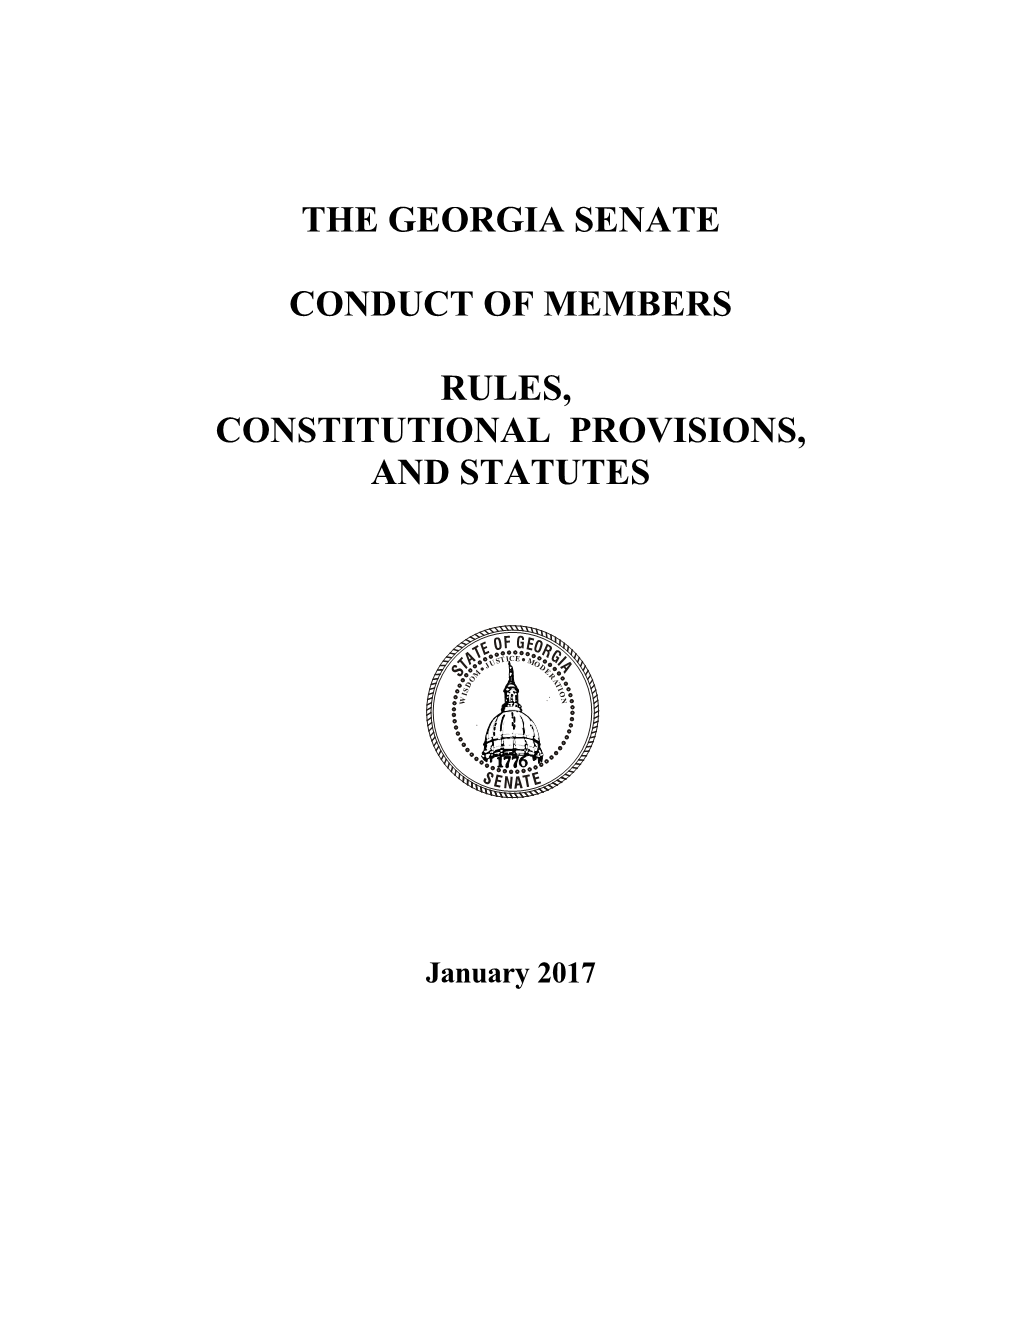 Senate Rules of Conduct